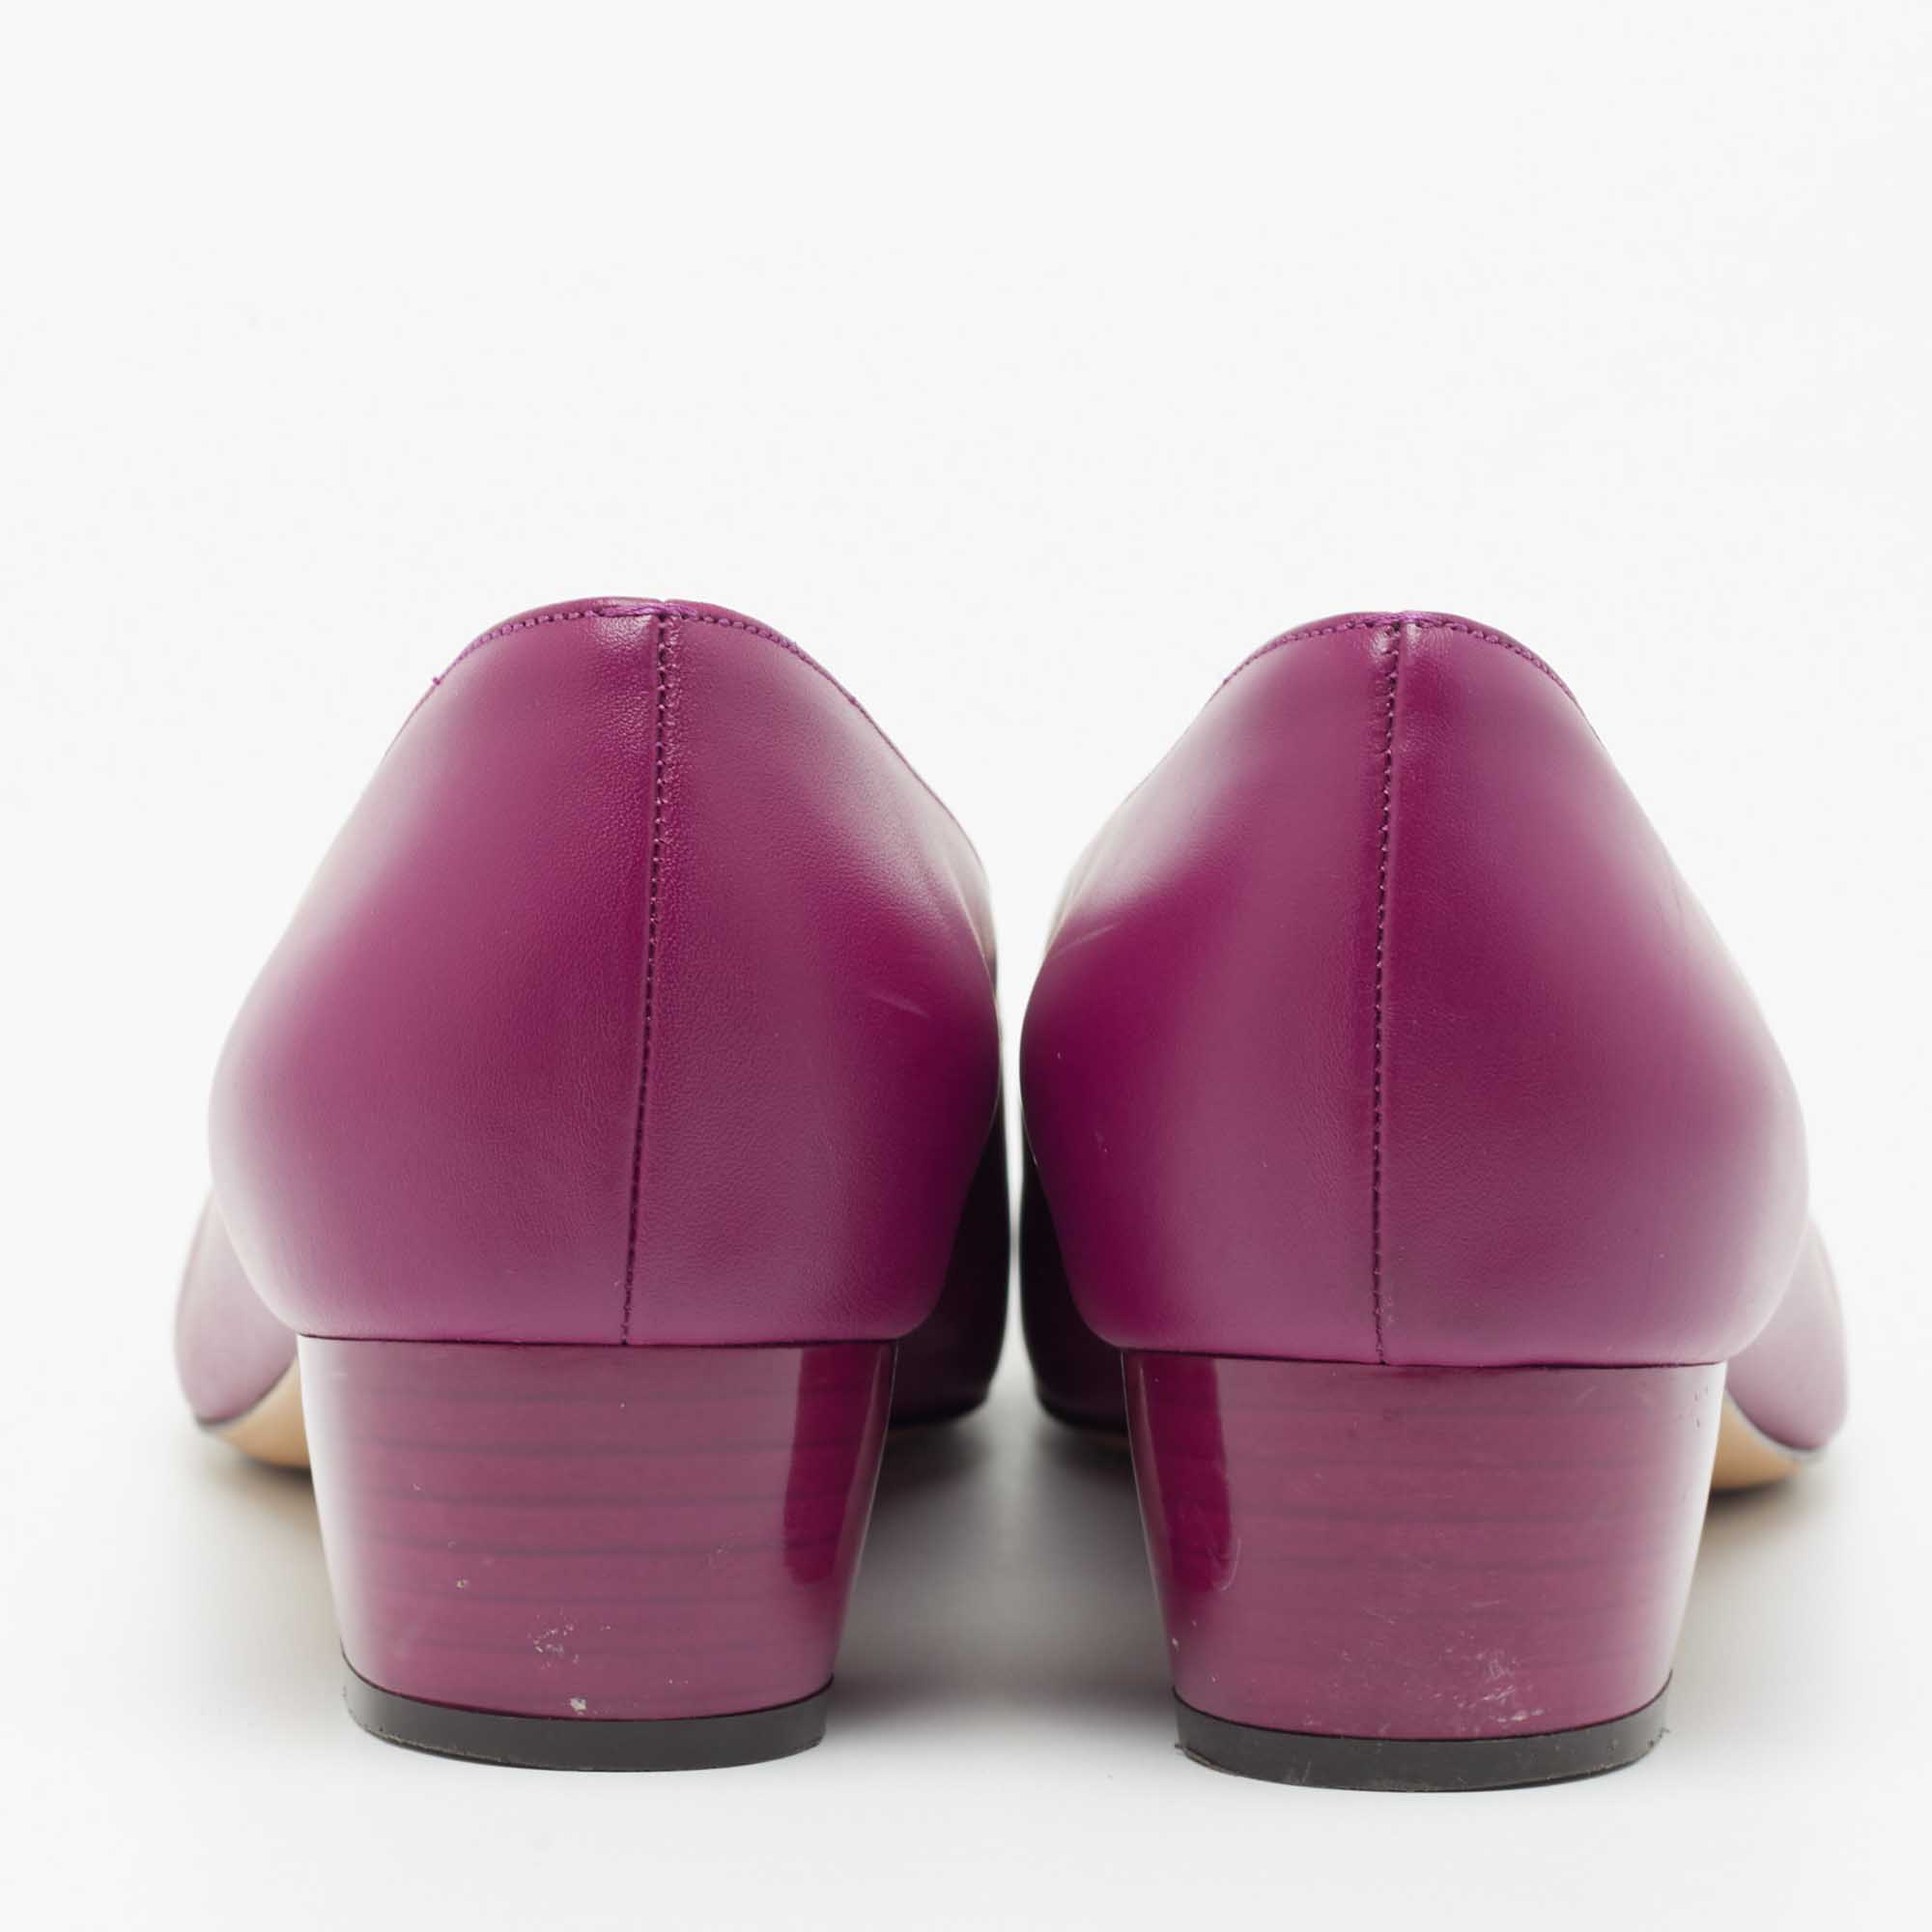 Salvatore Ferragamo Purple Leather Vara Bow Pumps Size 41